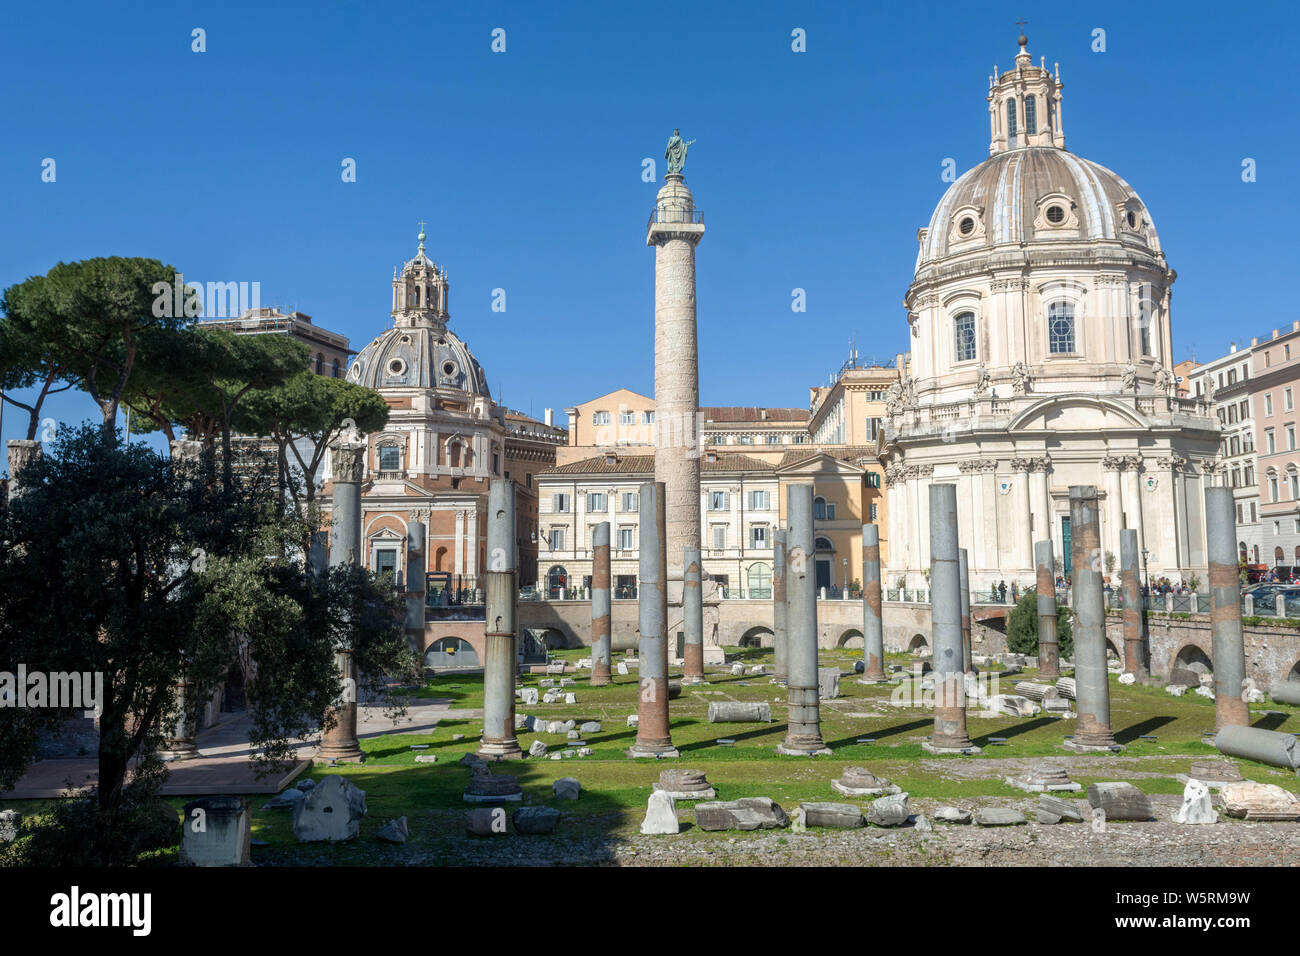 Italie, Rome : La Colonne Trajane et église de Santa Maria di Loreto, du Forum de Trajan, Foro di Traiano Banque D'Images